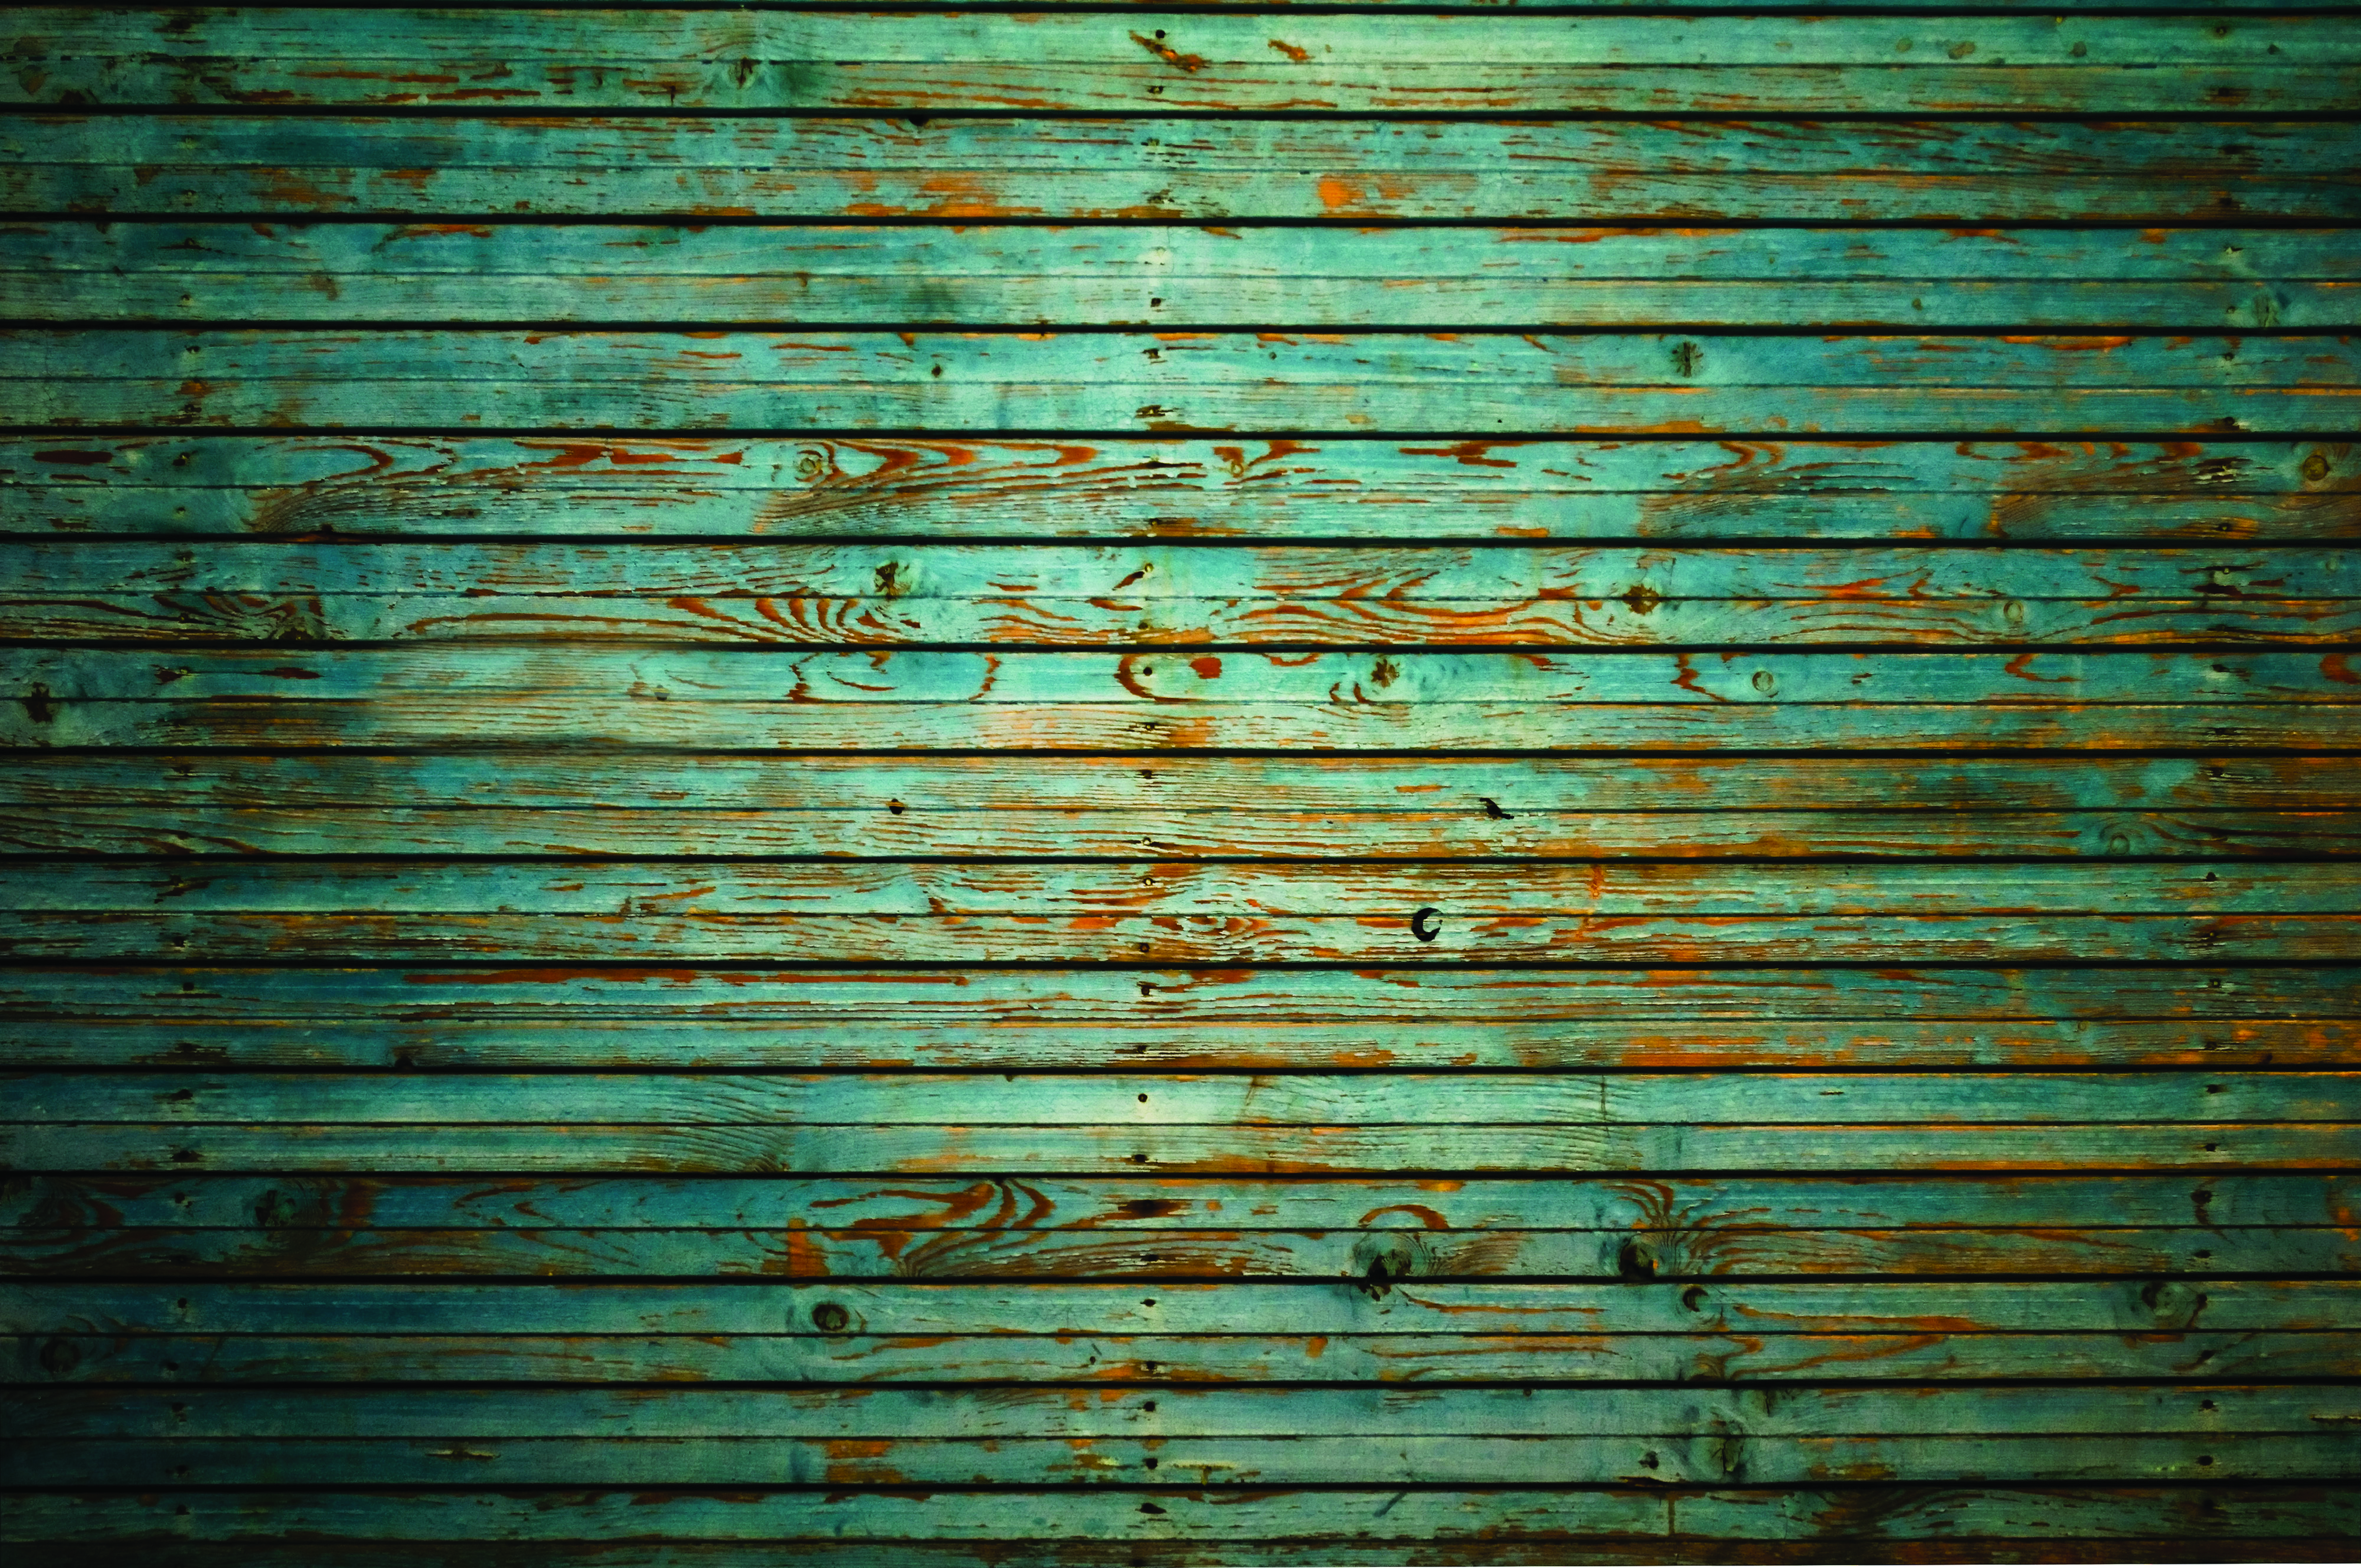 Origin Murals Rustic Wood Effect Blue Wall Mural - 3.5 x 2.8m